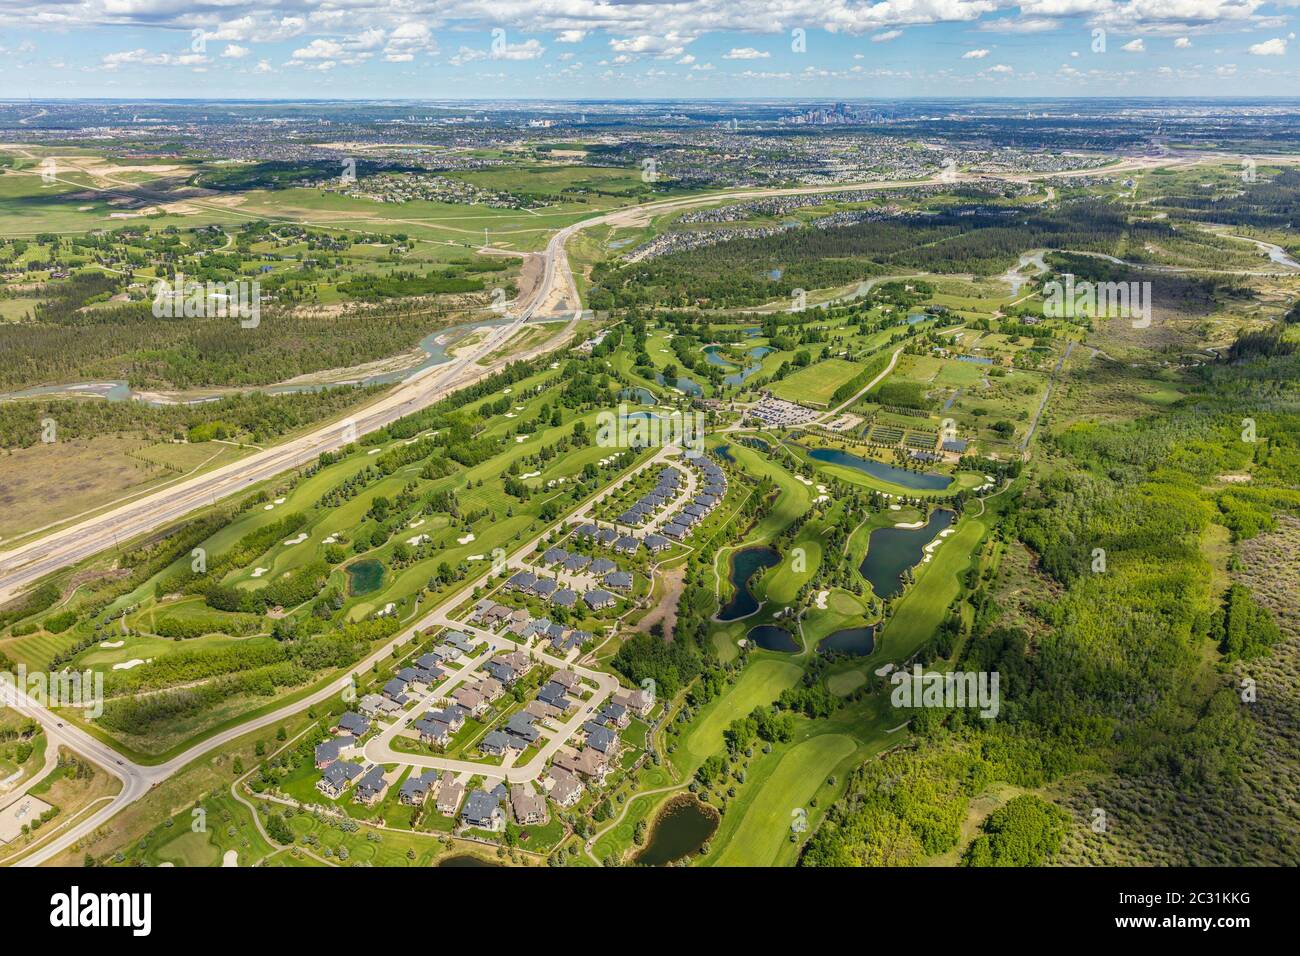 Elbow Springs golf course and community near Calgary, Alberta Canada. Stock Photo